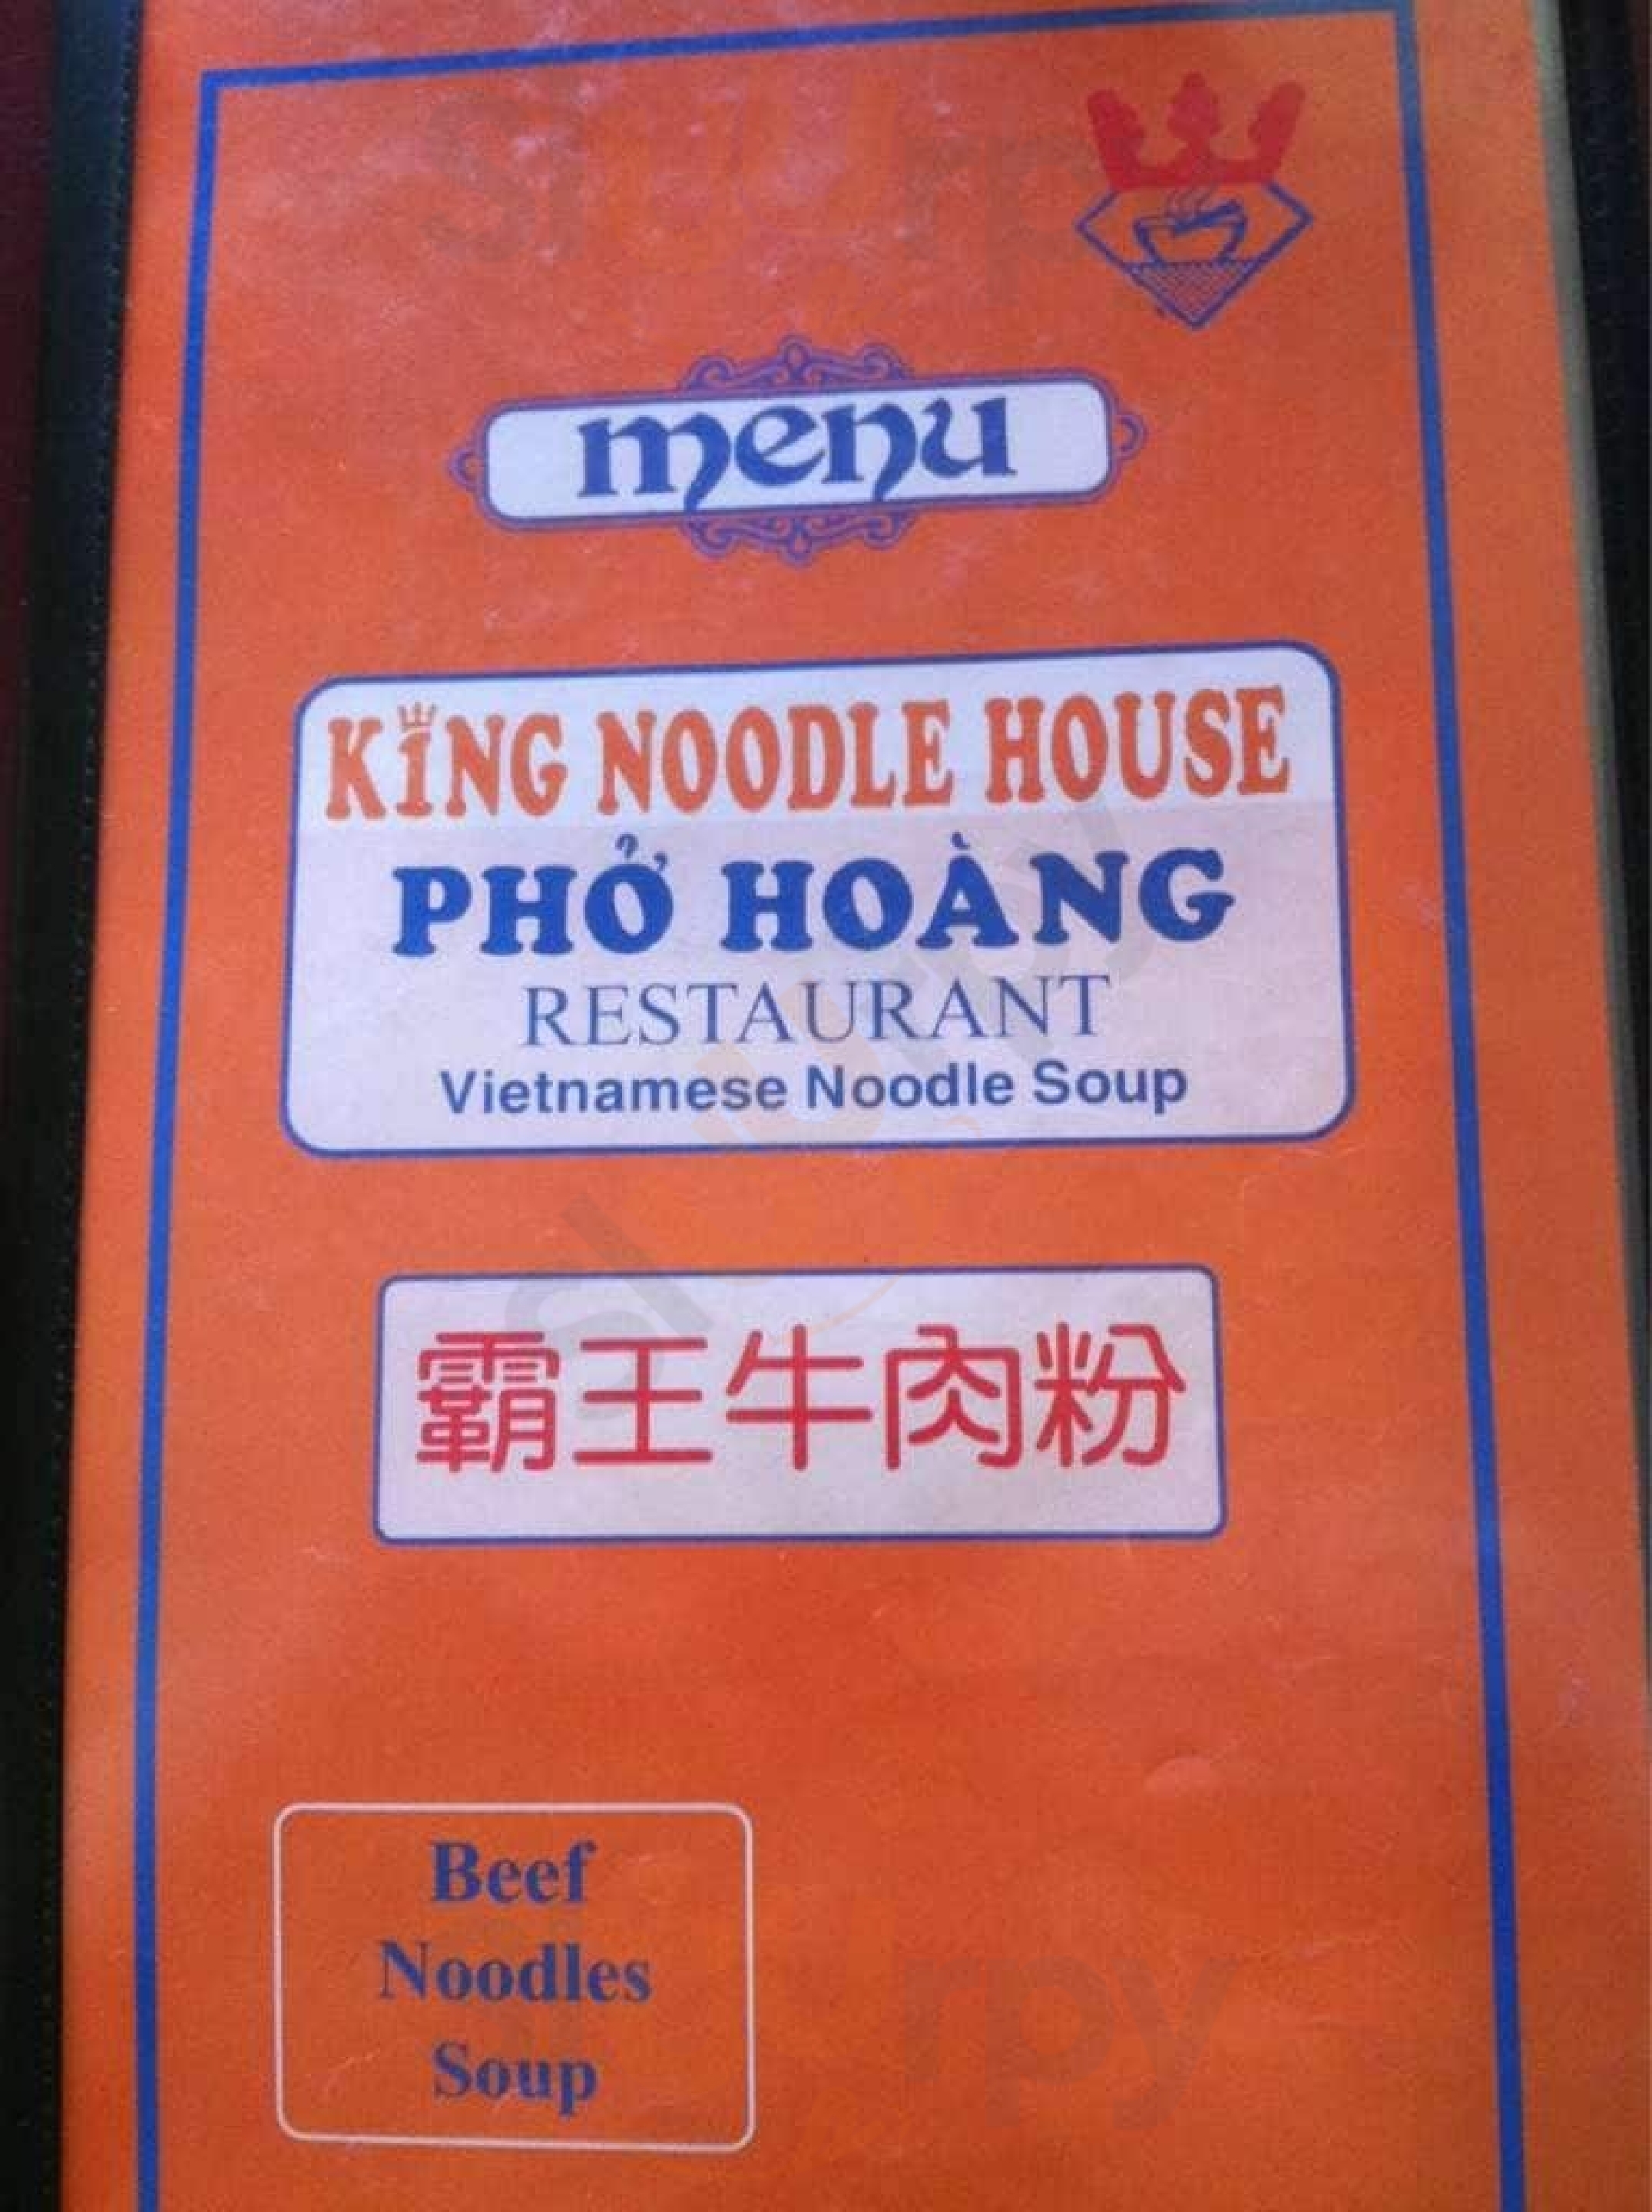 King Noodle House Phohoanc Ltd Edmonton Menu - 1